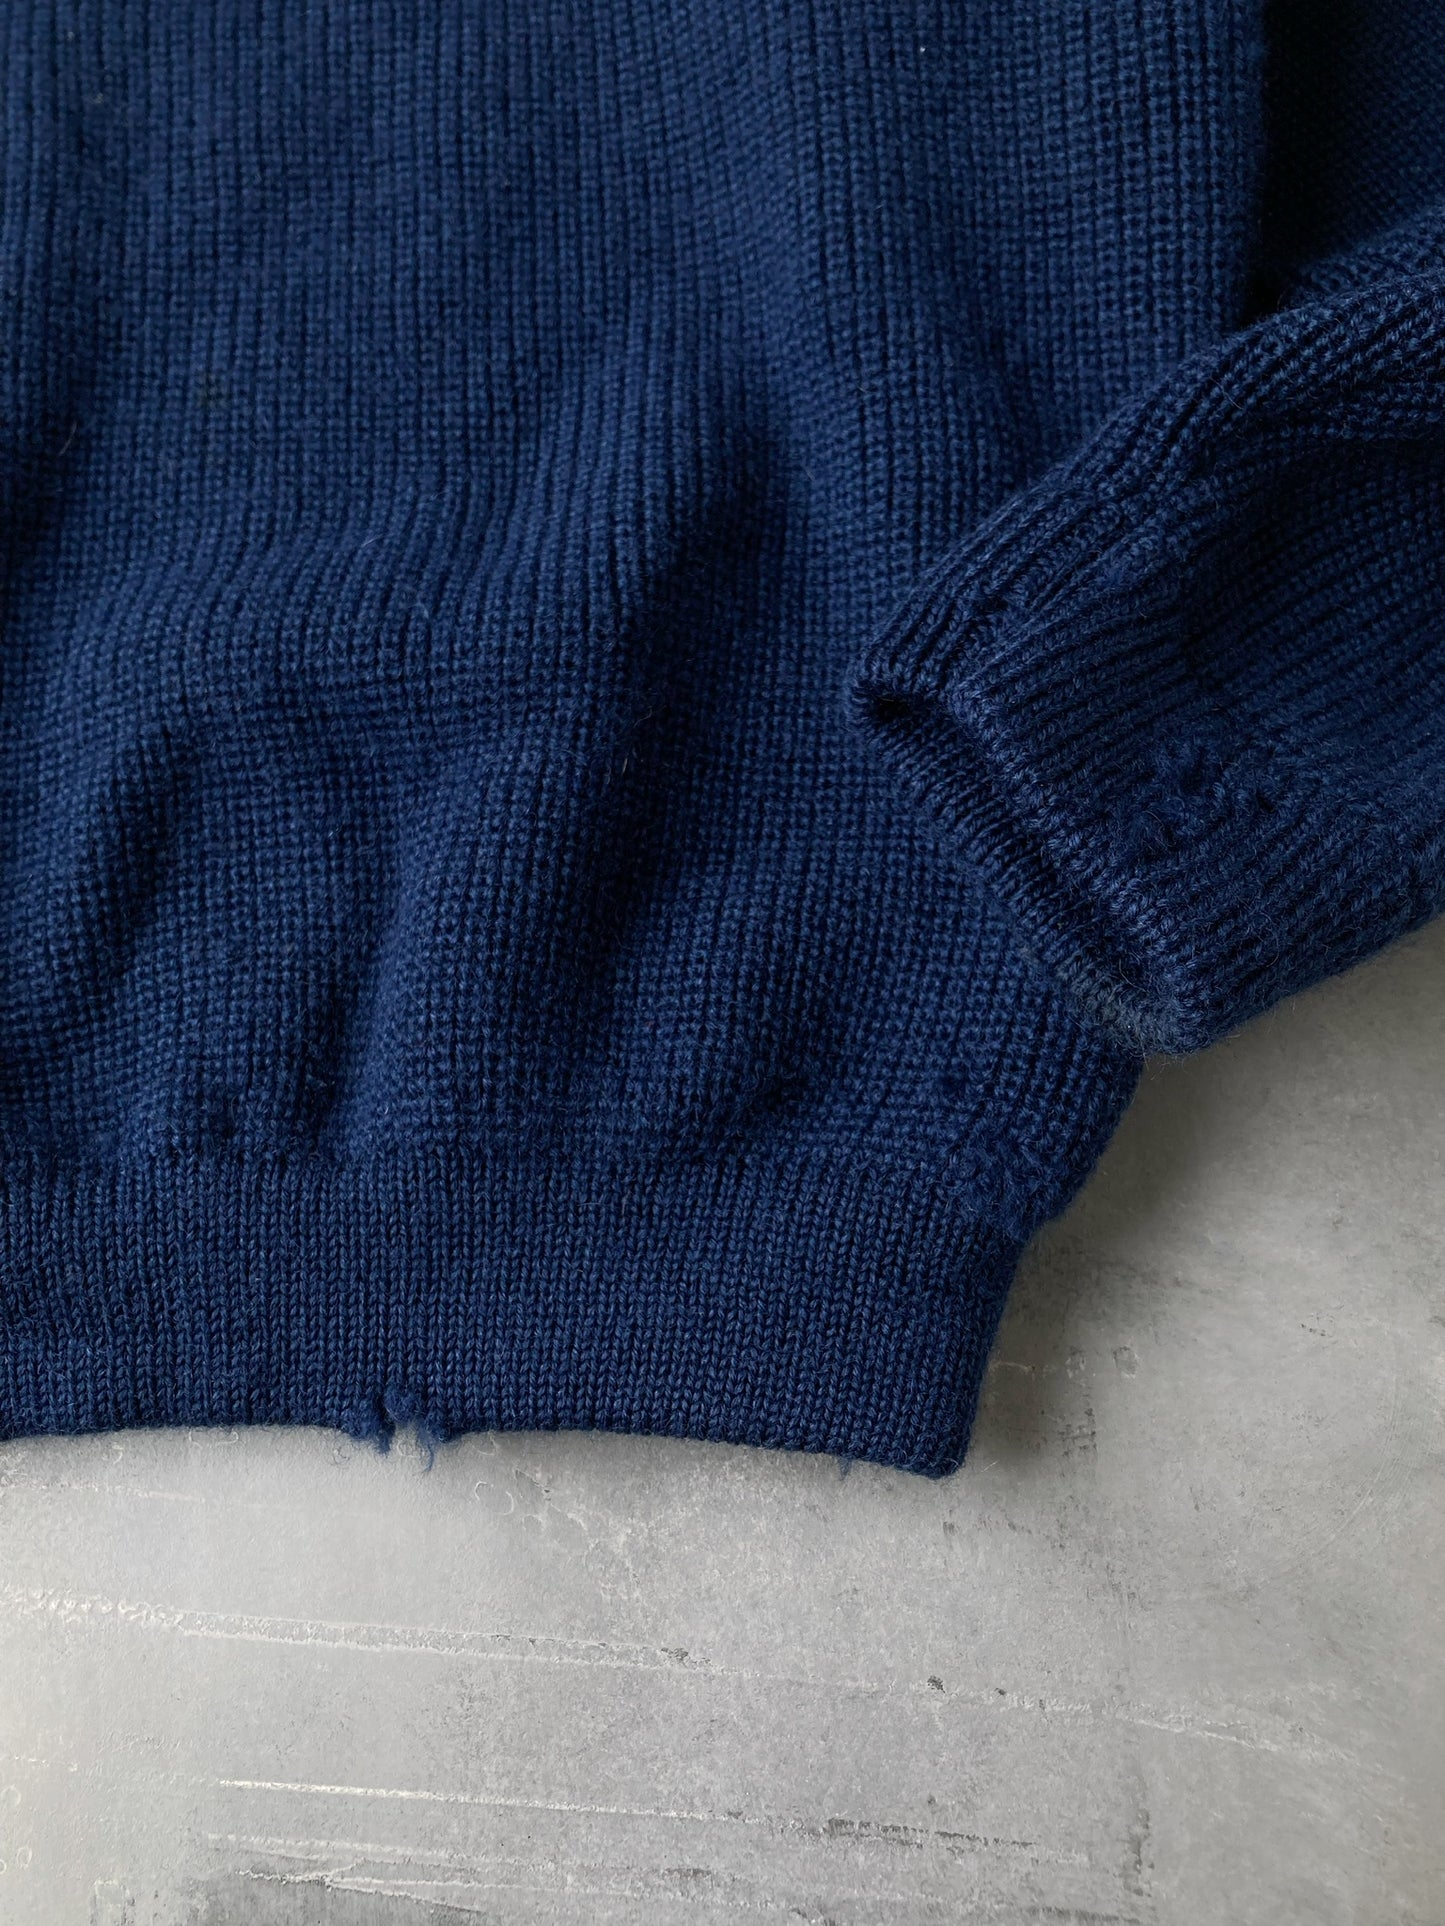 Distressed Blue Sweater 80's  - Medium